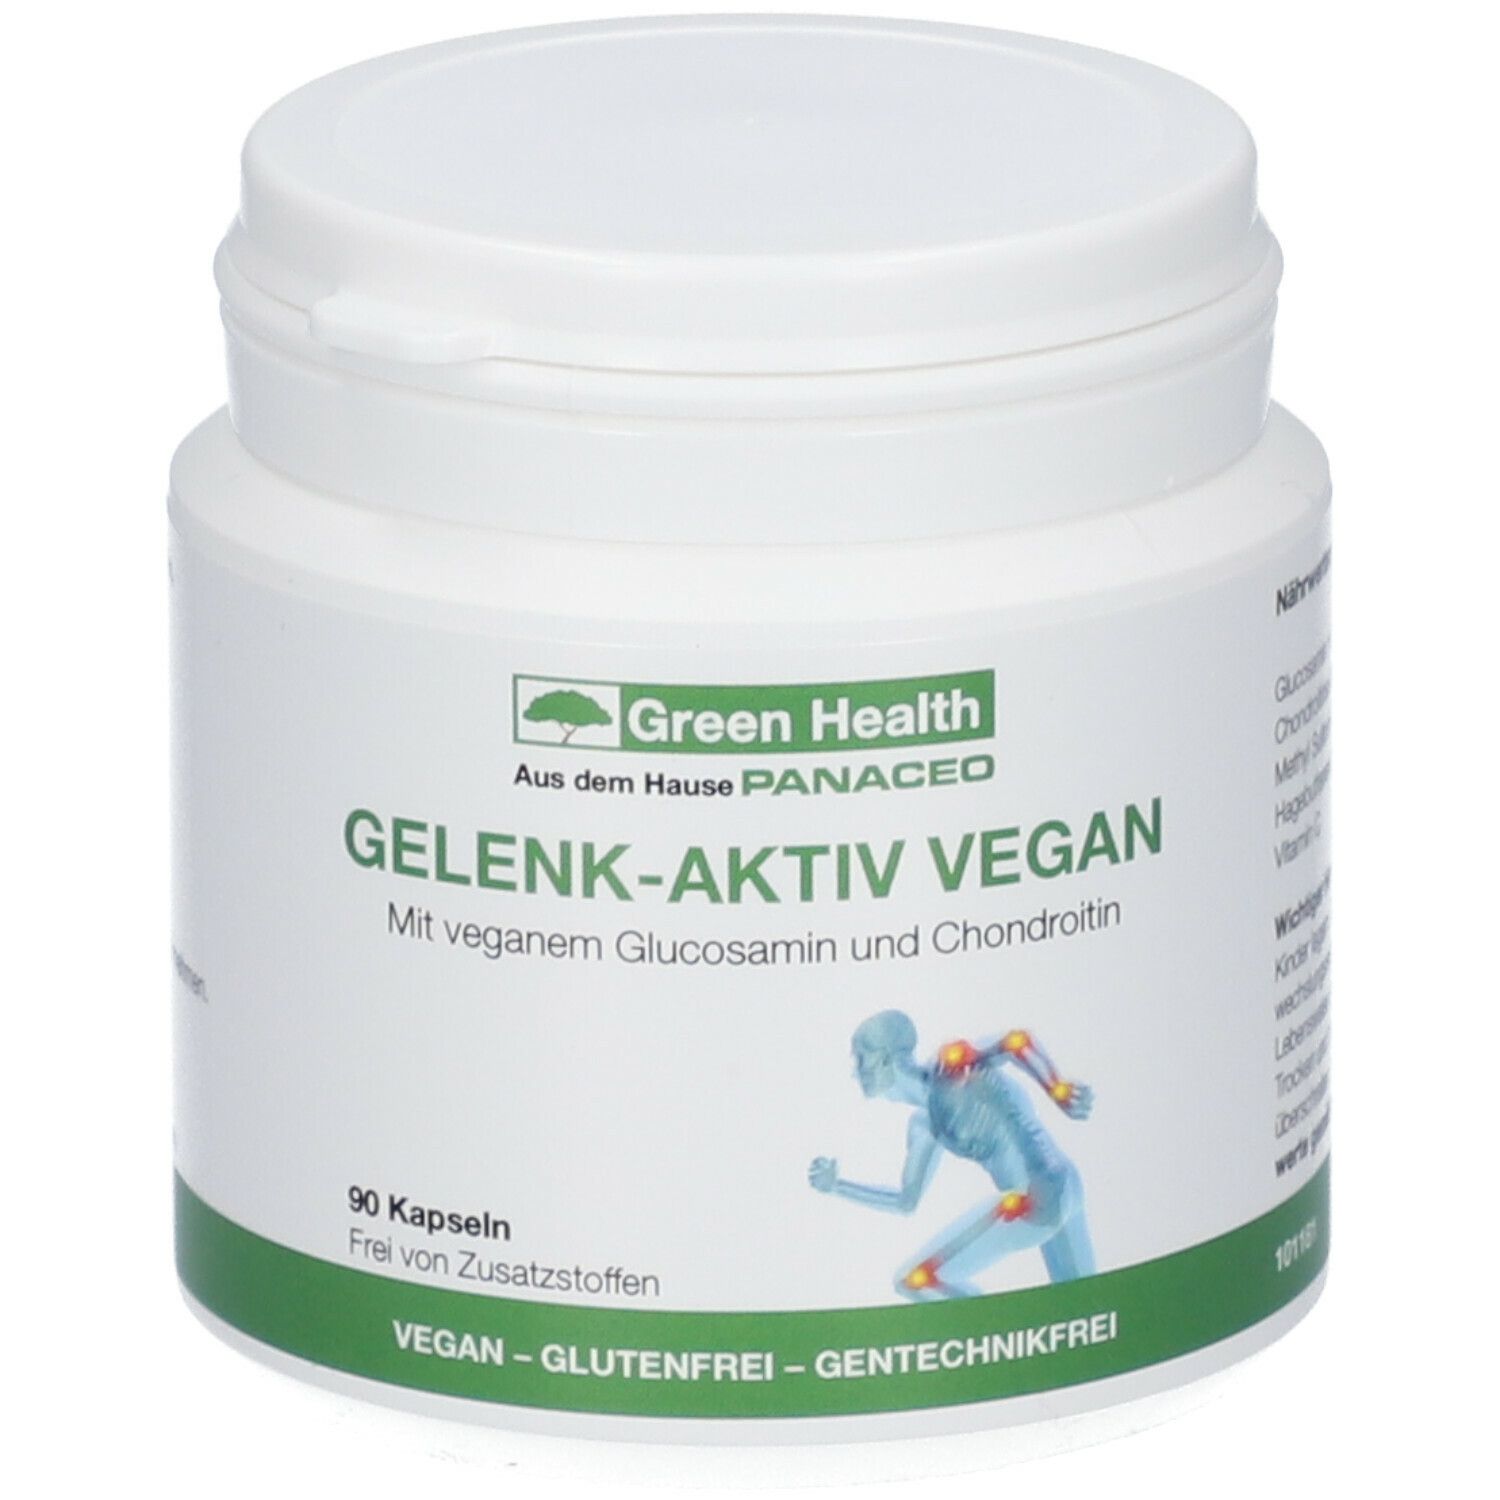 GREEN HEALTH GELENK-AKTIV VEGAN